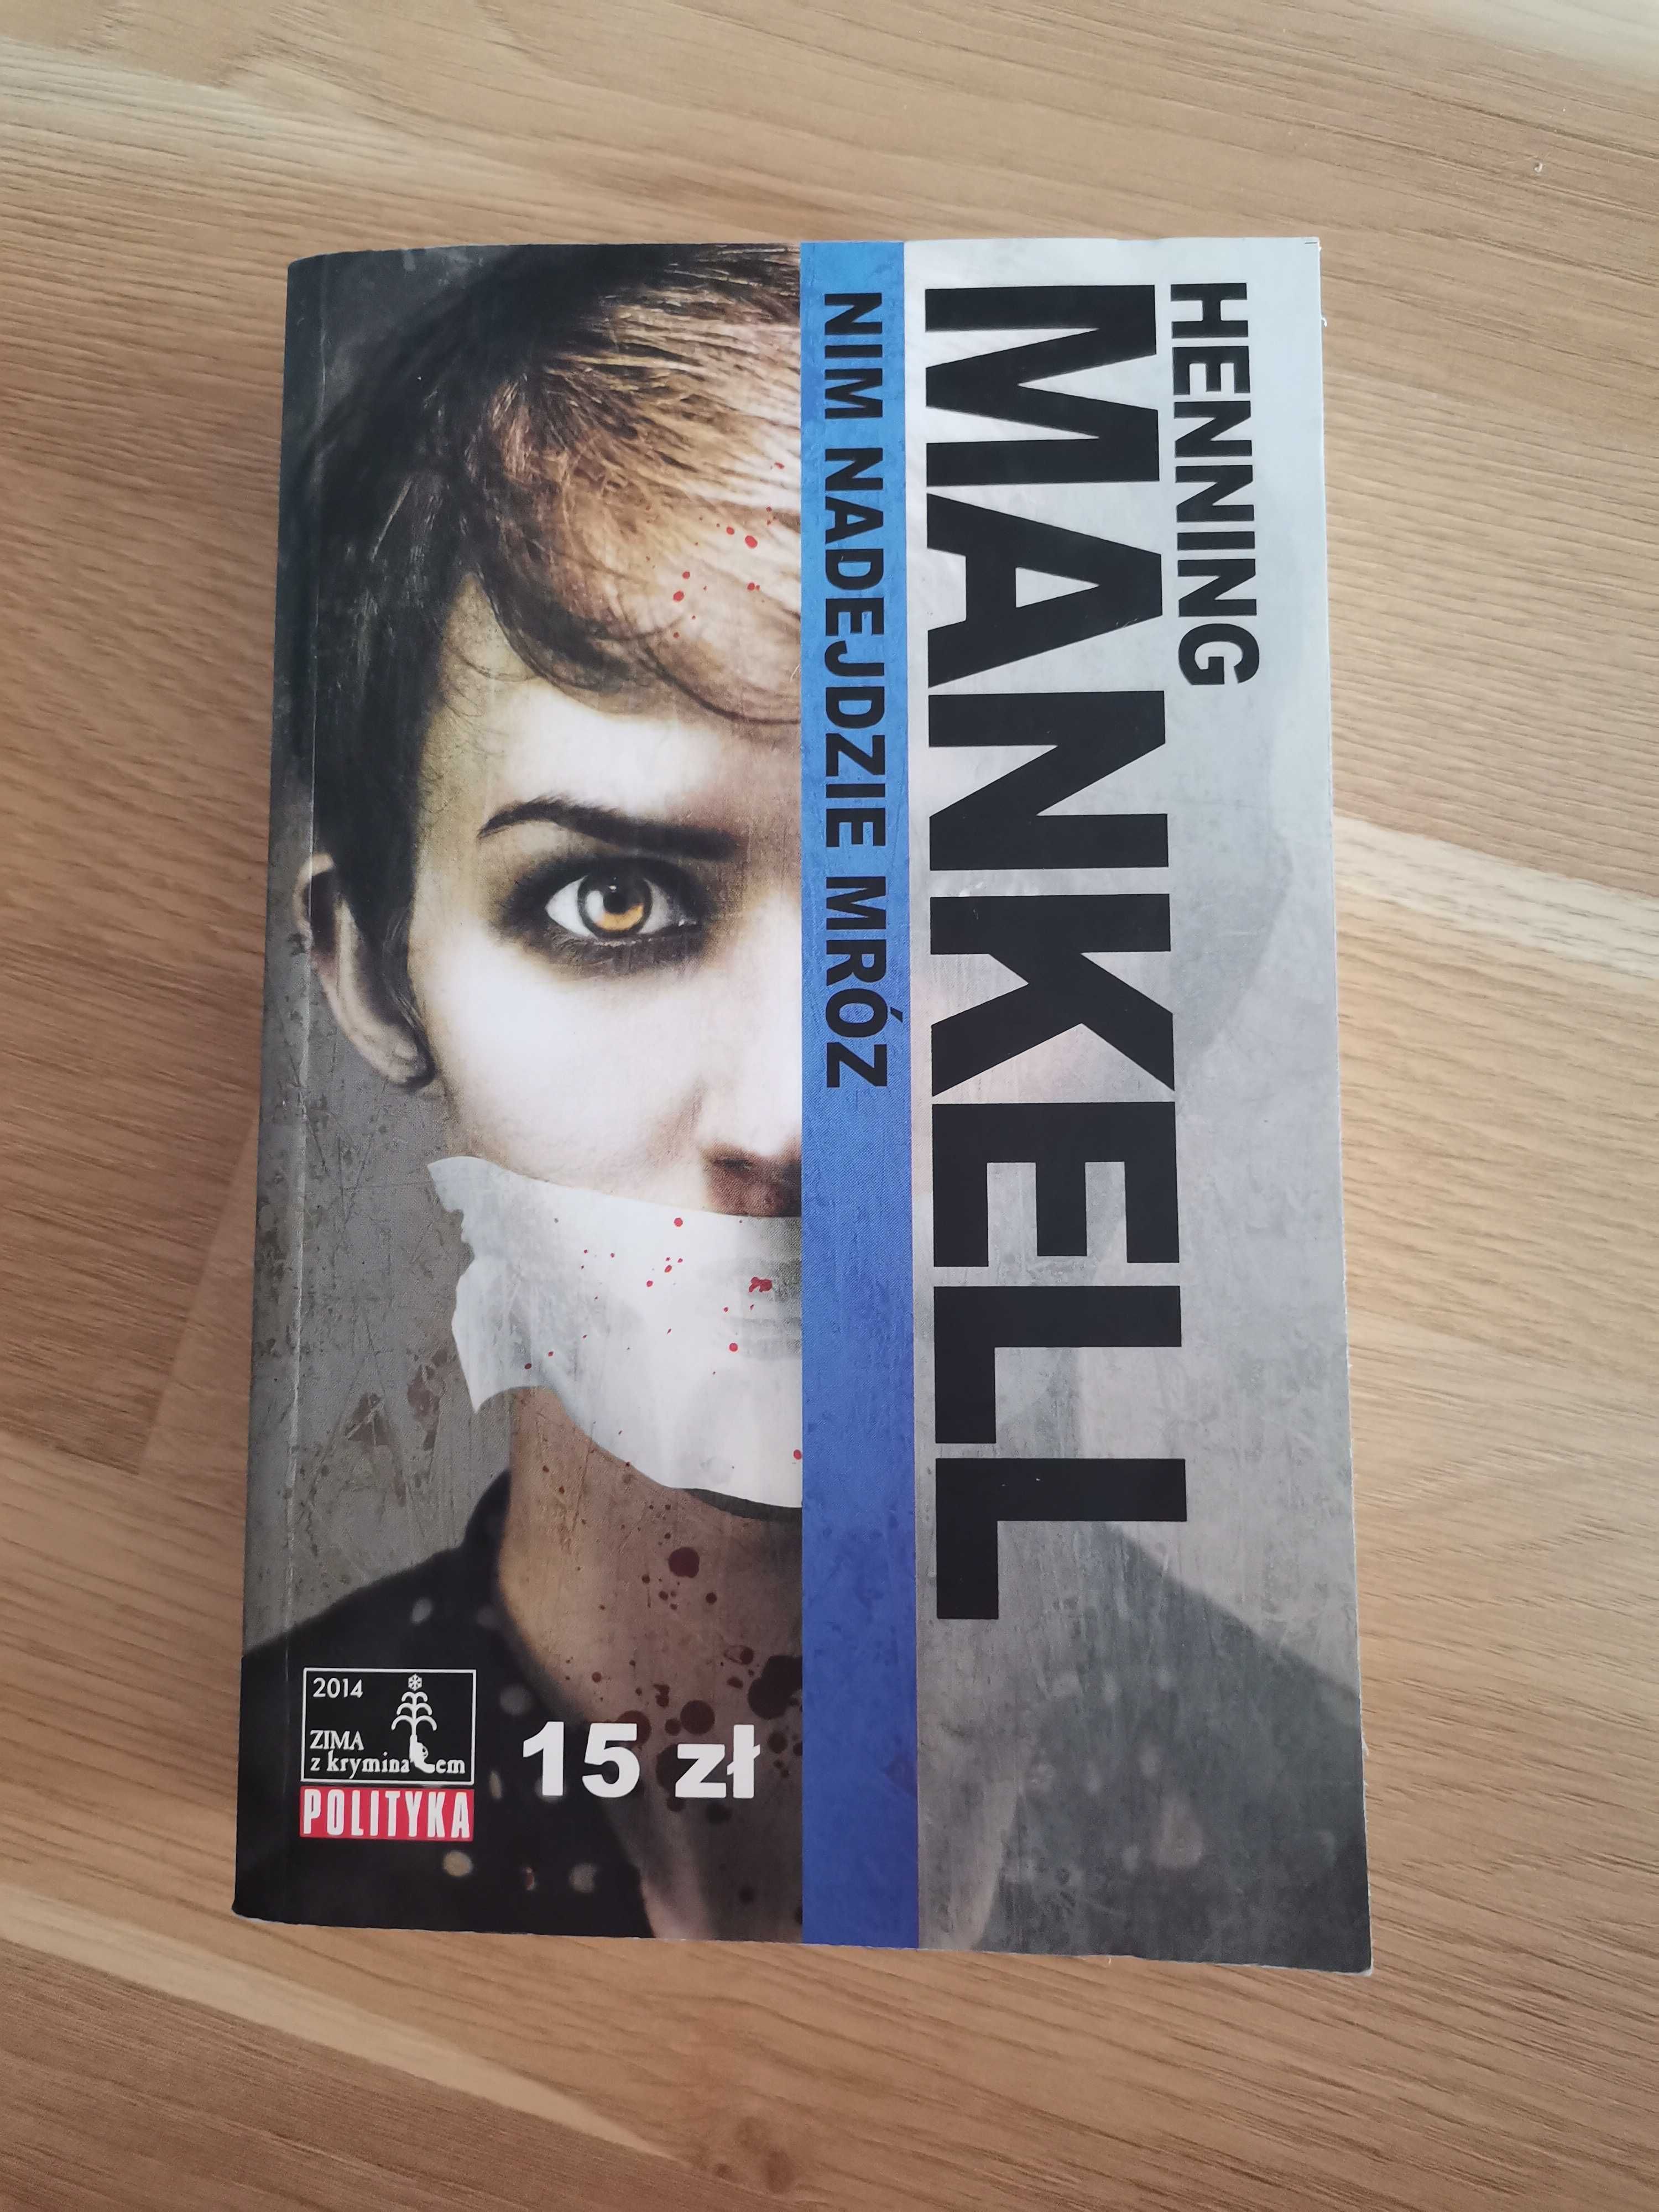 Książka Henning Mankell "Nim nadejdzie mróz" kryminał